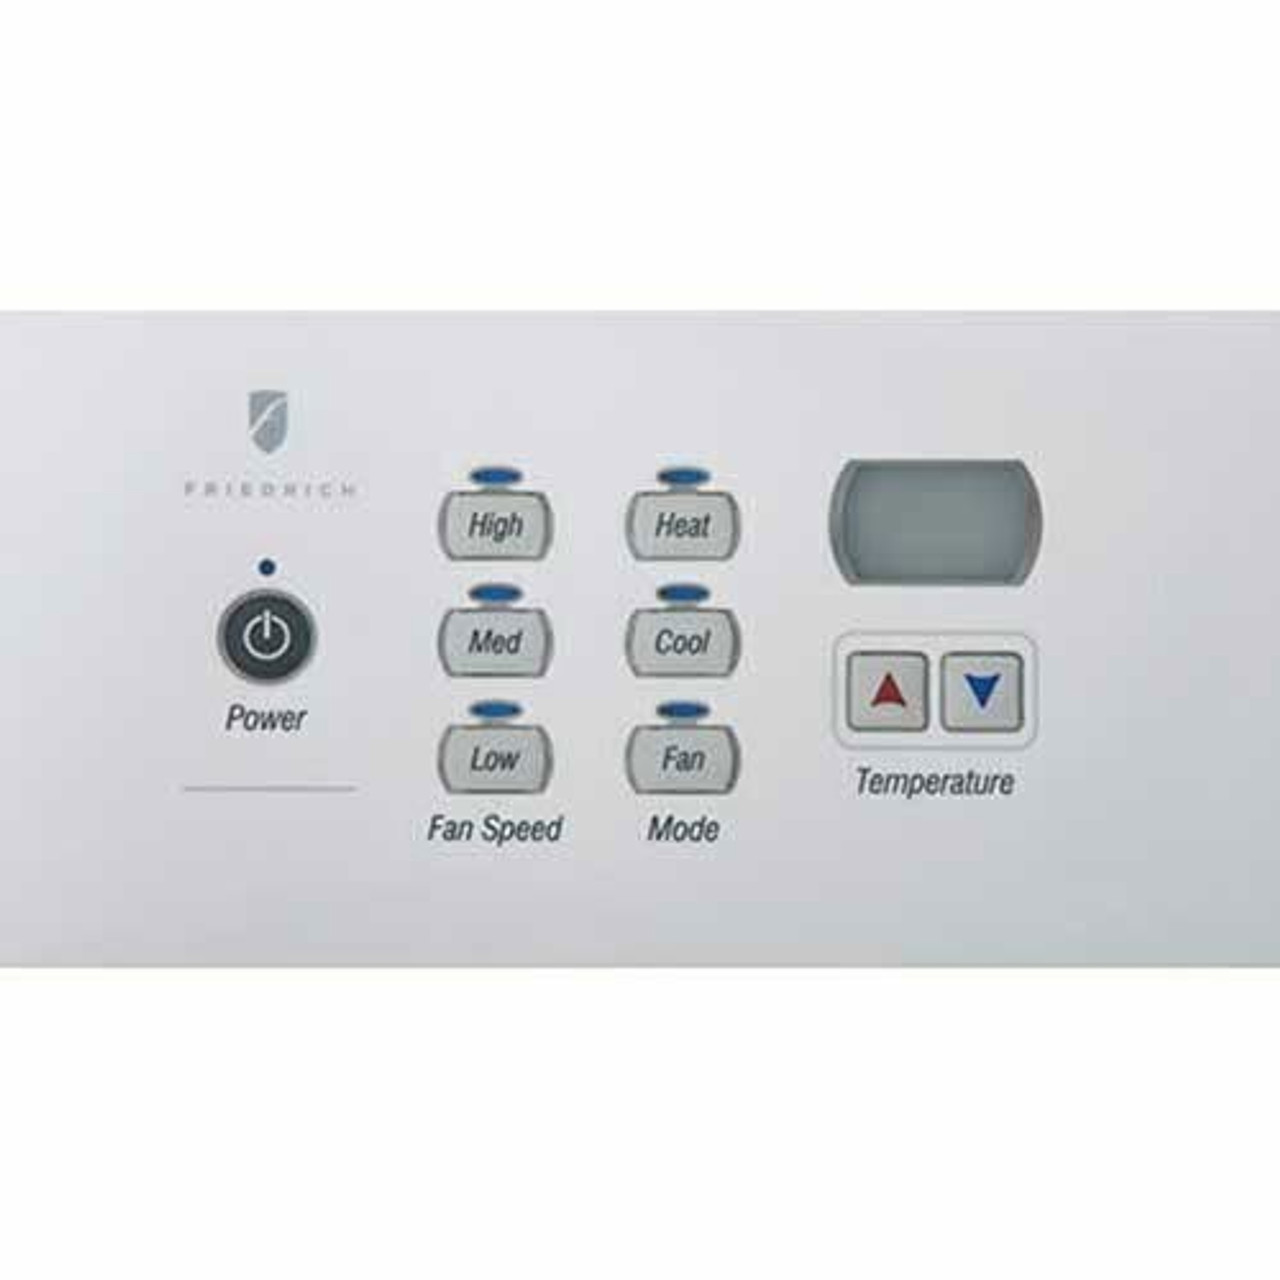 Friedrich Wireless Remote Thermostat & Base Module